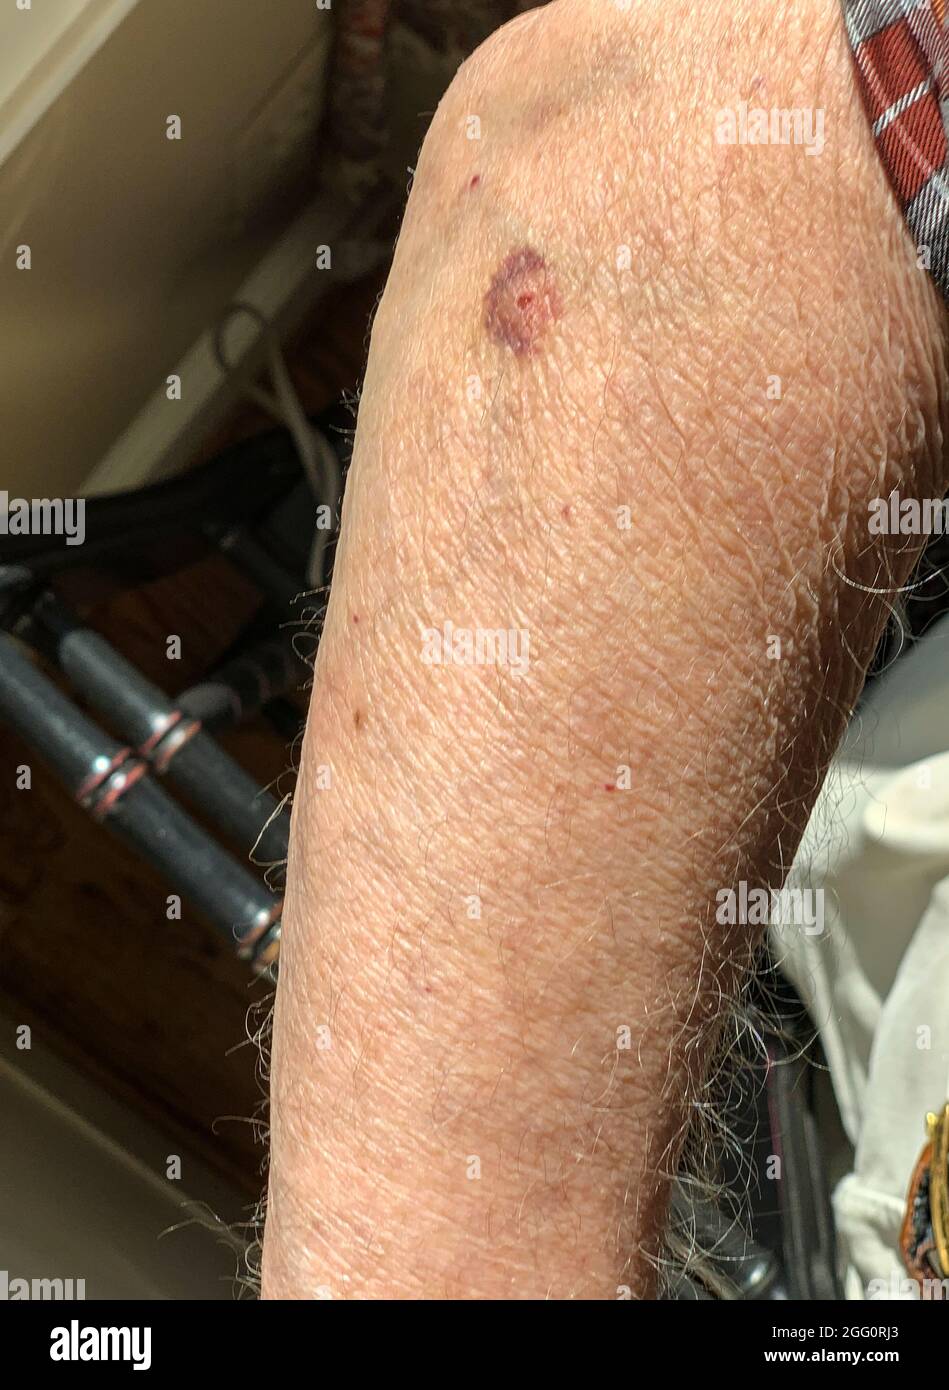 Bullseye Rash on Upper Arm, Sign of Lyme Disease. Stock Photo